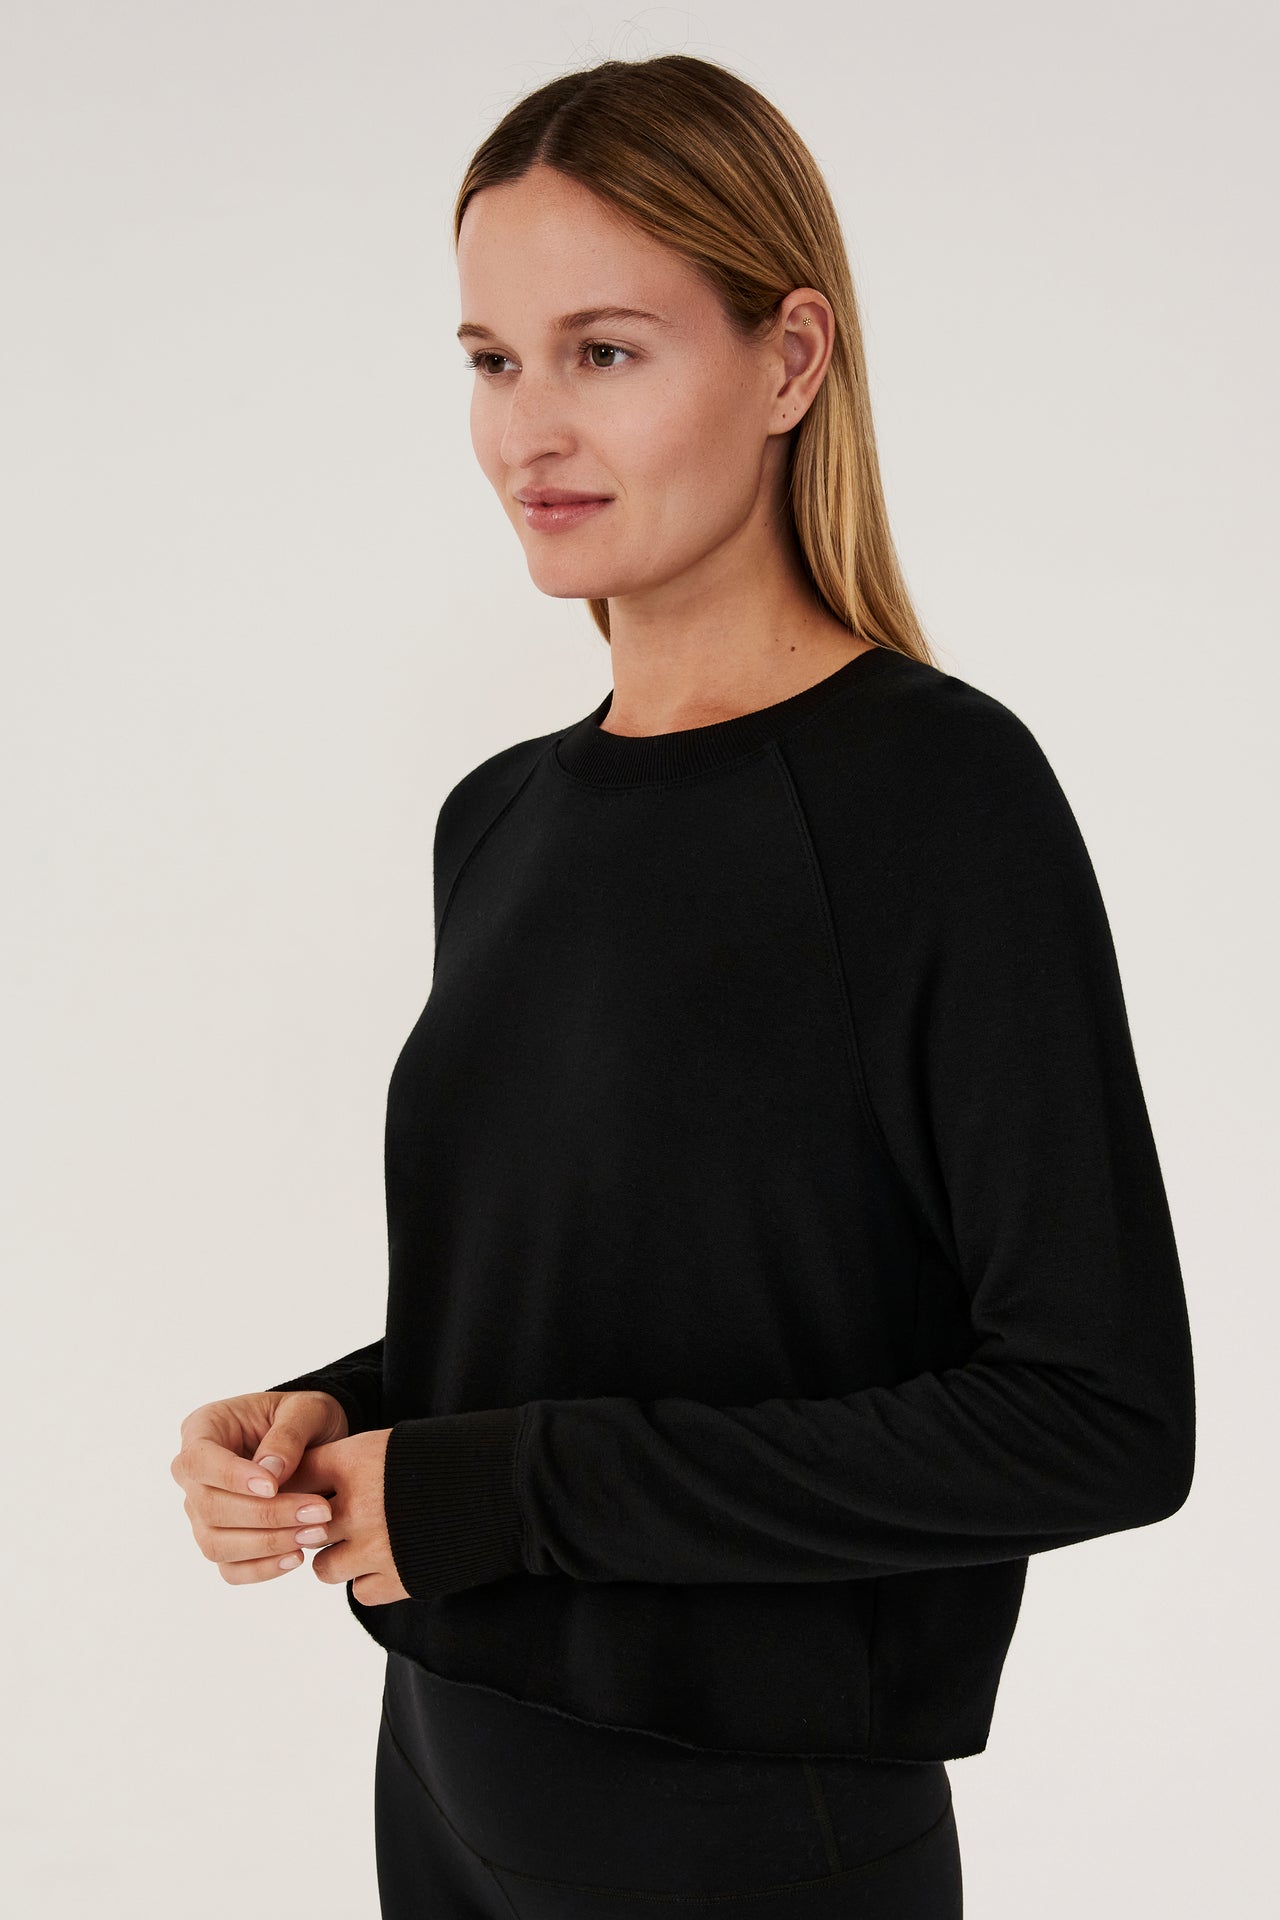 Front side view of woman with dark blonde hair, wearing black cropped sweatshirt with black leggings